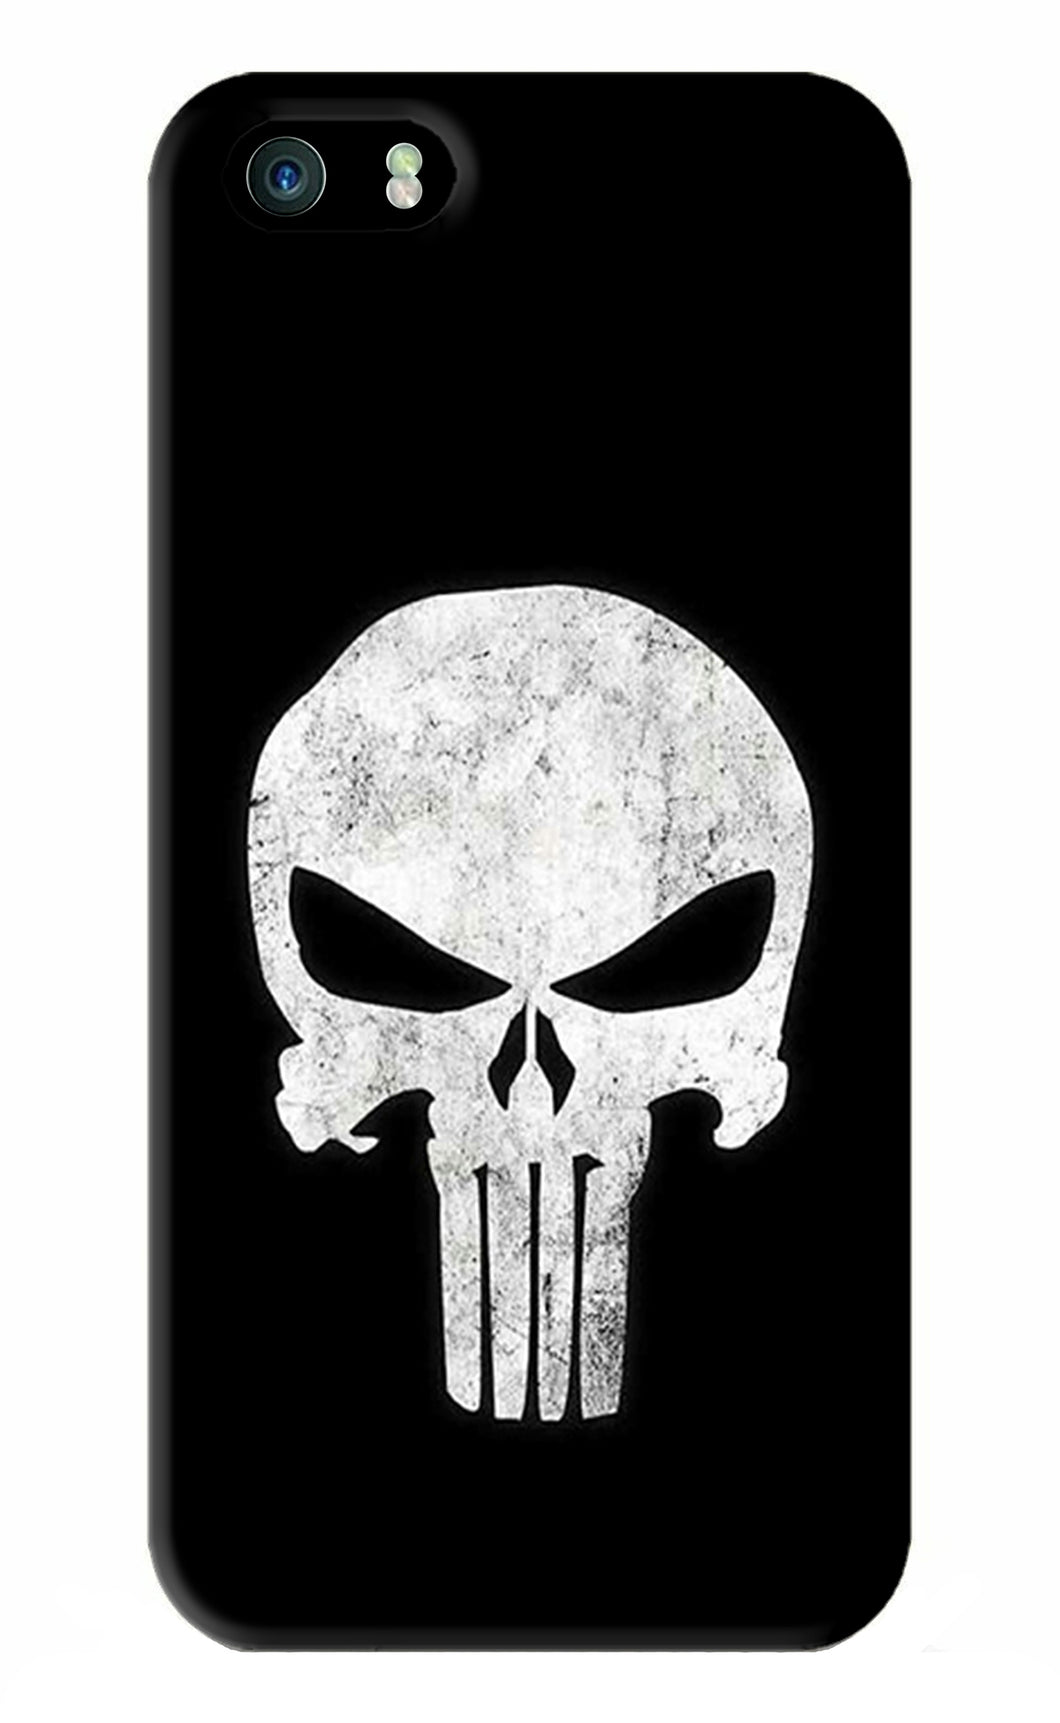 Punisher Skull iPhone 5S Back Skin Wrap